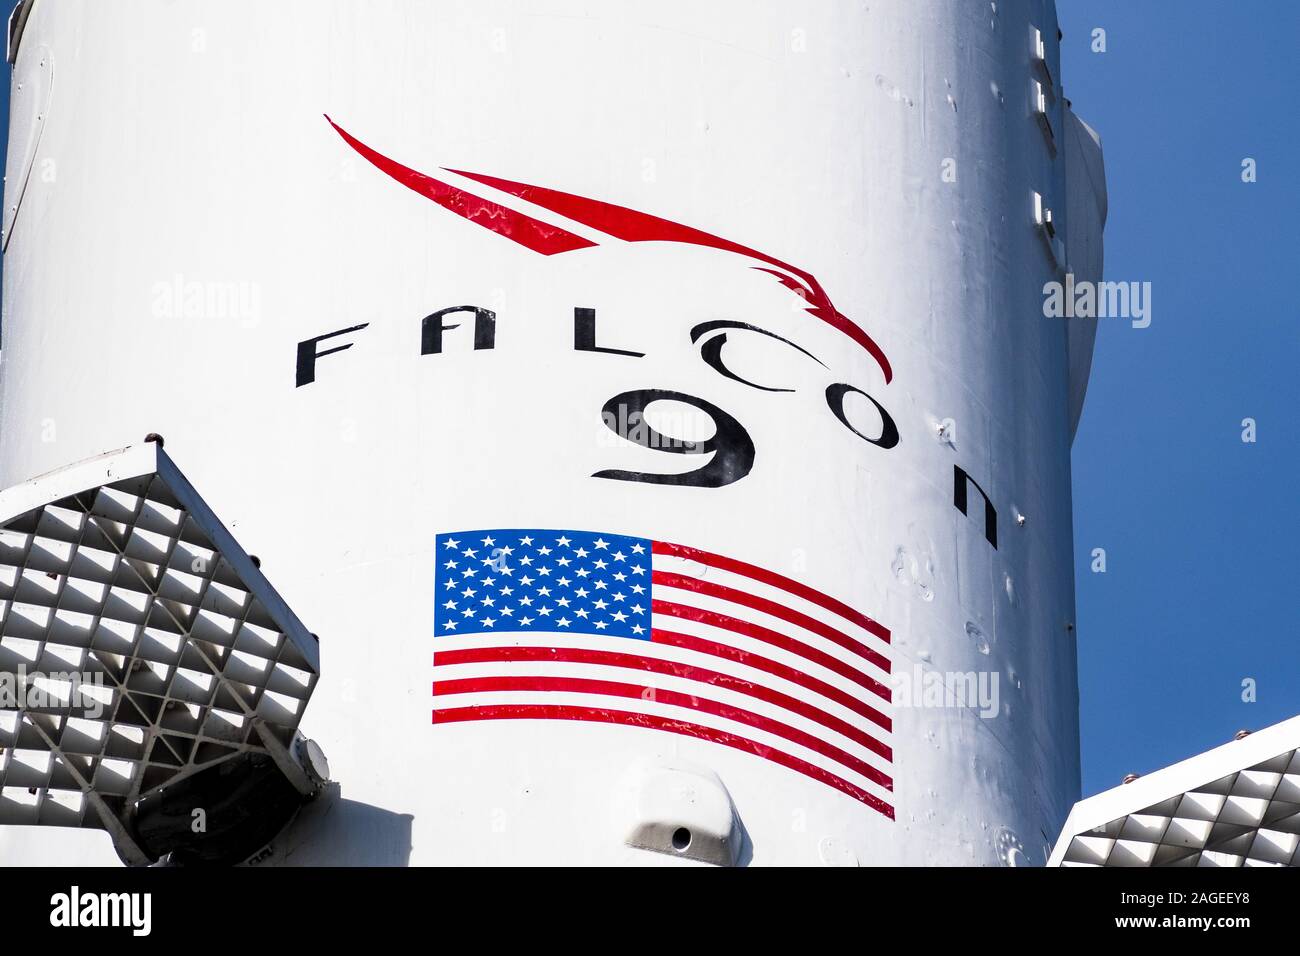 Dec 8, 2019 Hawthorne/Los Angeles/CA/USA - Falcon 9 Rakete Logo an SpaceX (Space Exploration Technologies Corp.) Sitz; SpaceX ist ein priva Stockfoto